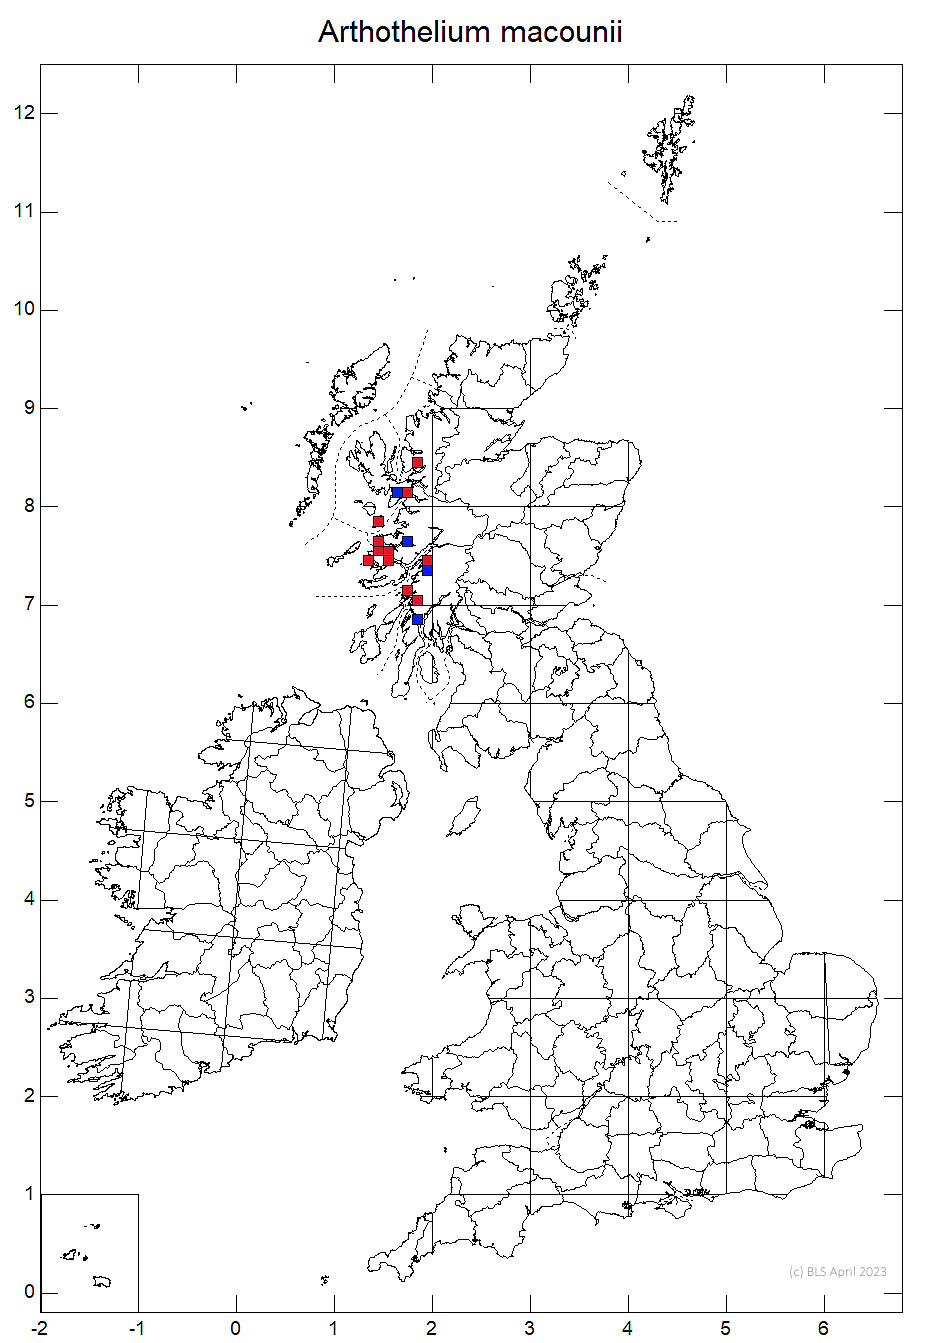 Arthothelium macounii 10km sq distribution map